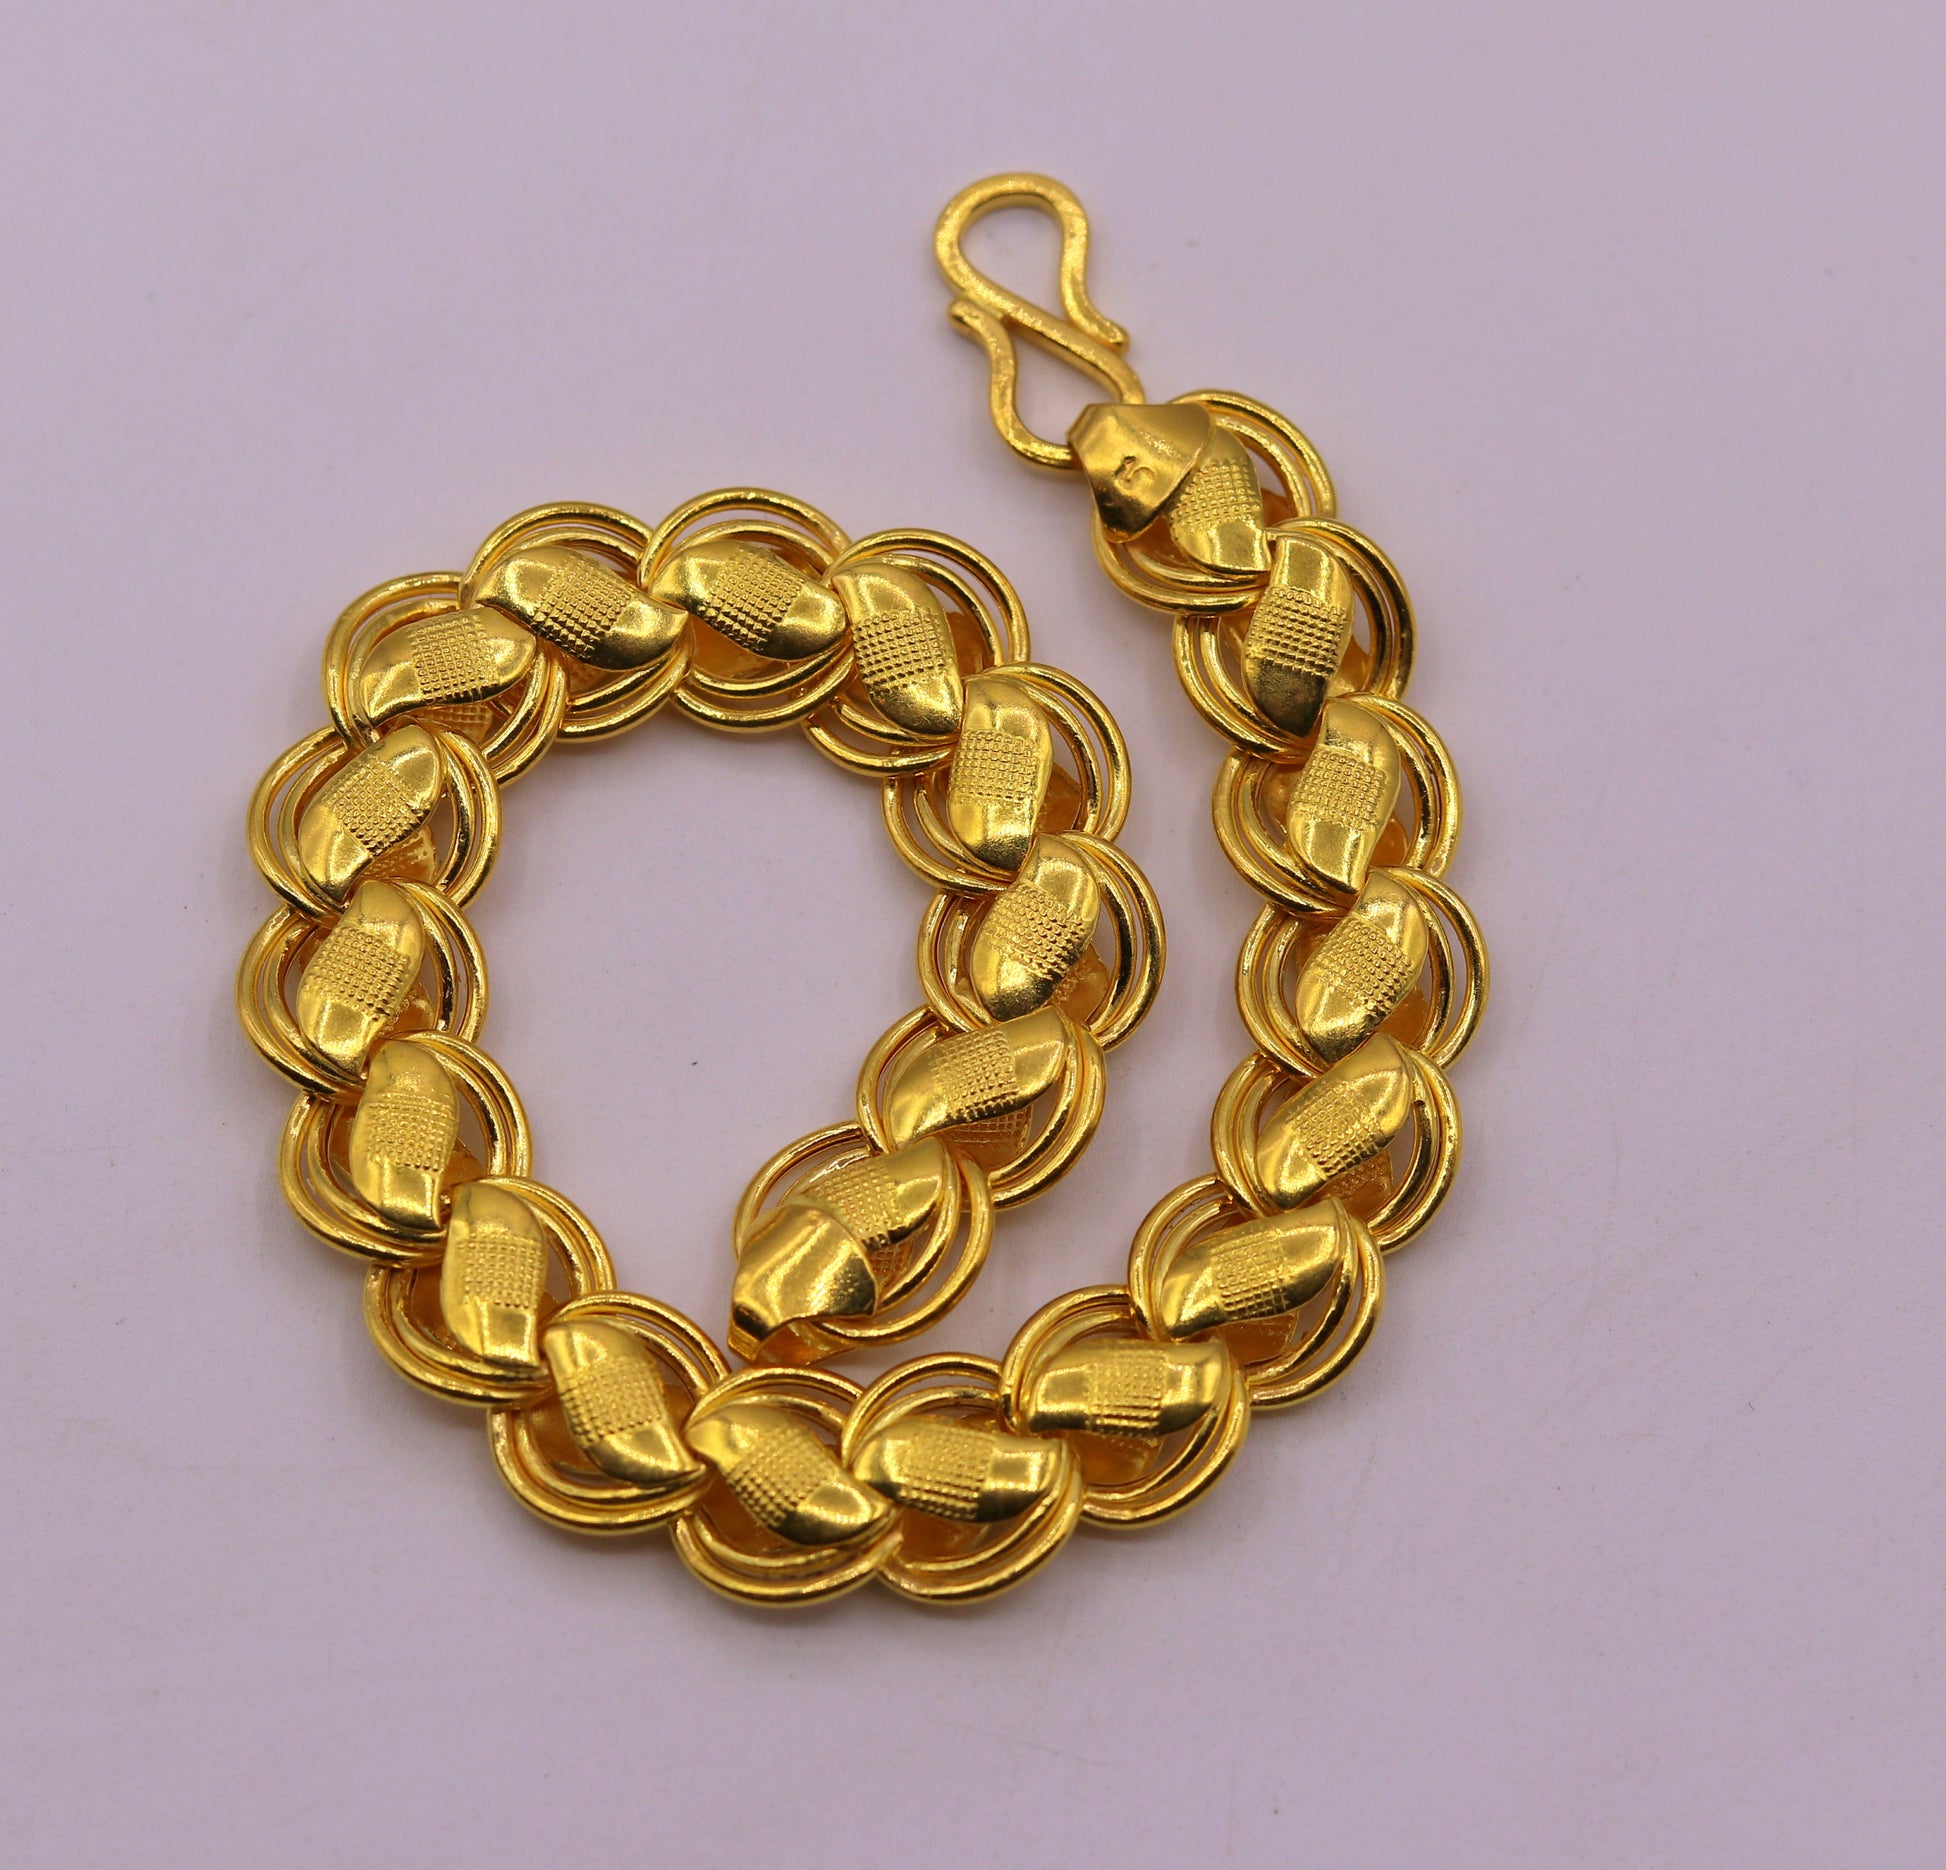 Genuine 22kt yellow gold handmade Lotus chain bracelet amazing royal design bracelet unisex jewelry from Rajasthan India - TRIBAL ORNAMENTS